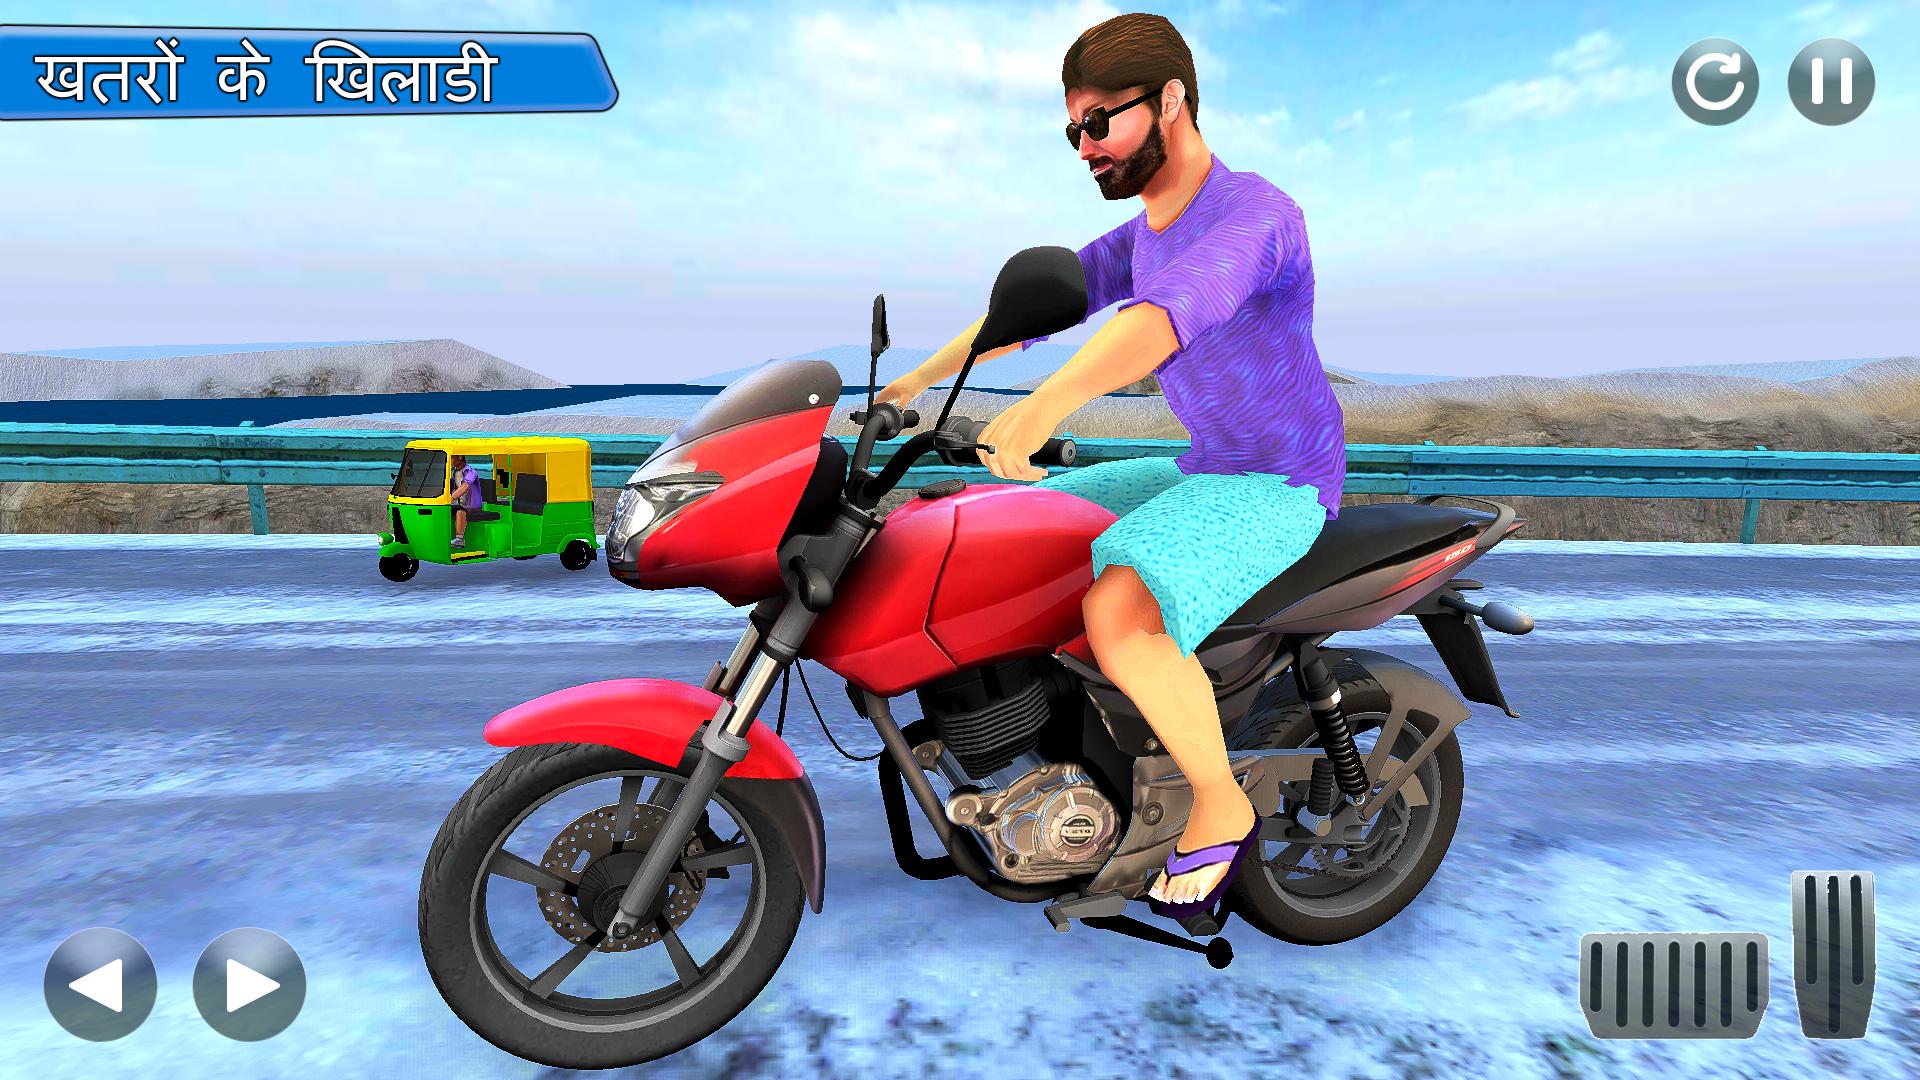 Bike Rider Gadi wala 3D Games für Android - Screen 7.jpg?fakeurl=1&type=